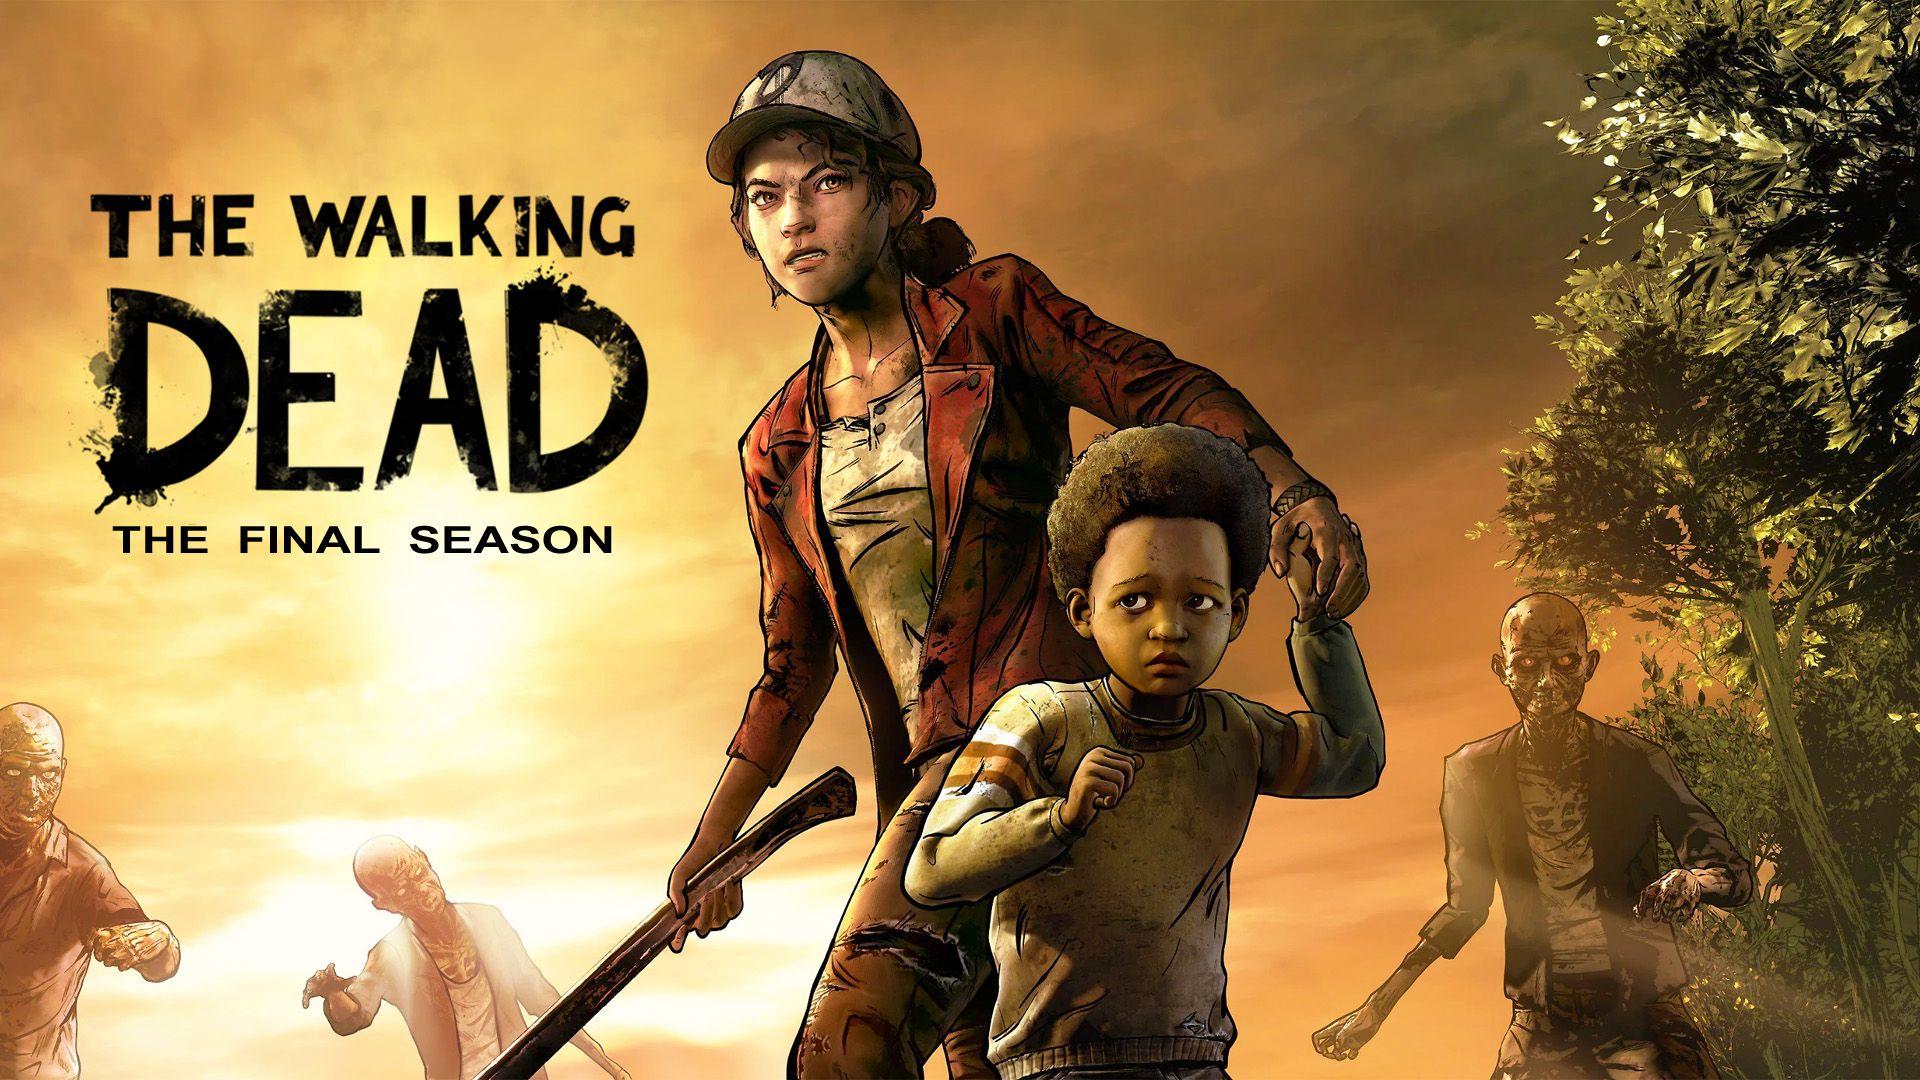 The Walking Dead: The Final Season Episode 1 Review